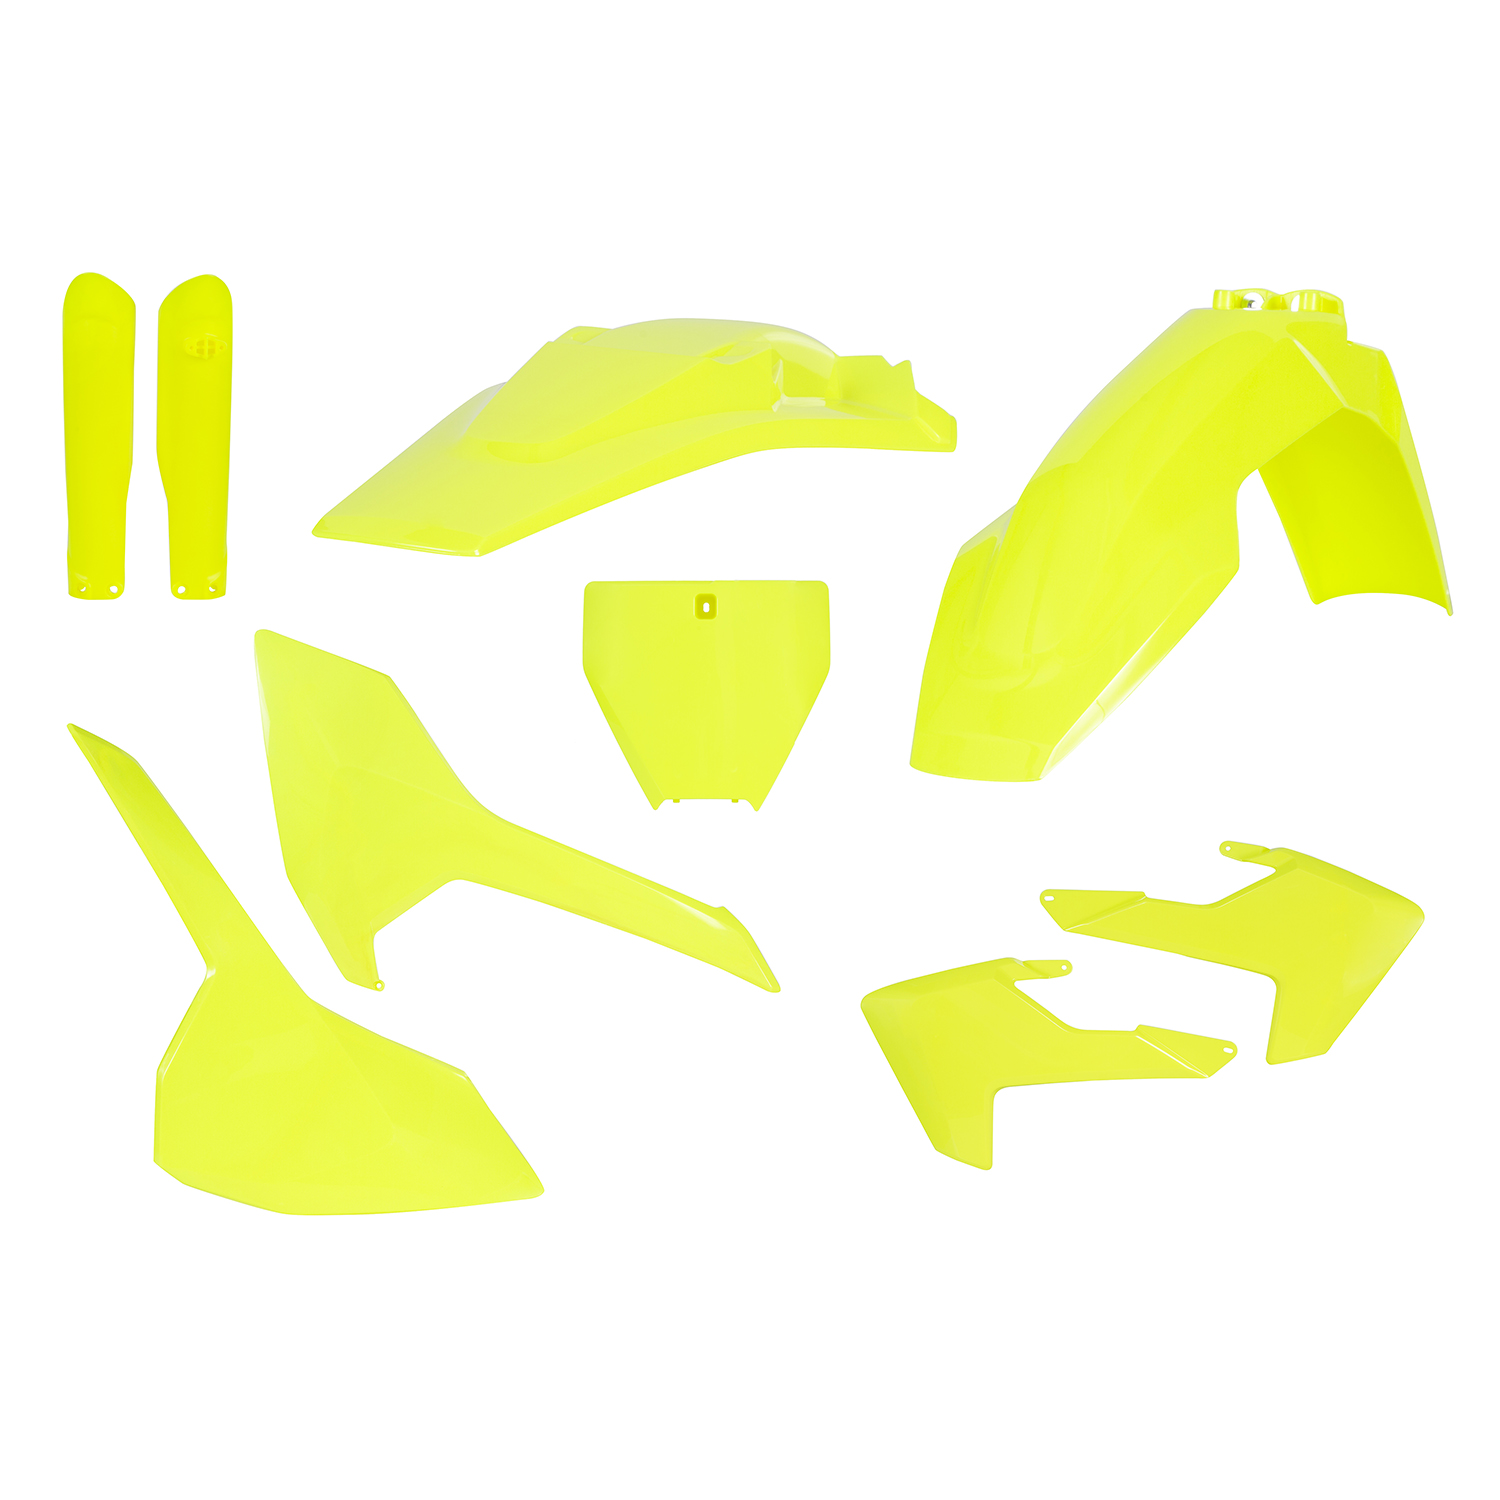 Acerbis Kit Plastiche completo Full-Kit Husqvarna TC 125/250, FC 250/350/450 16-18, Fluo-Yellow